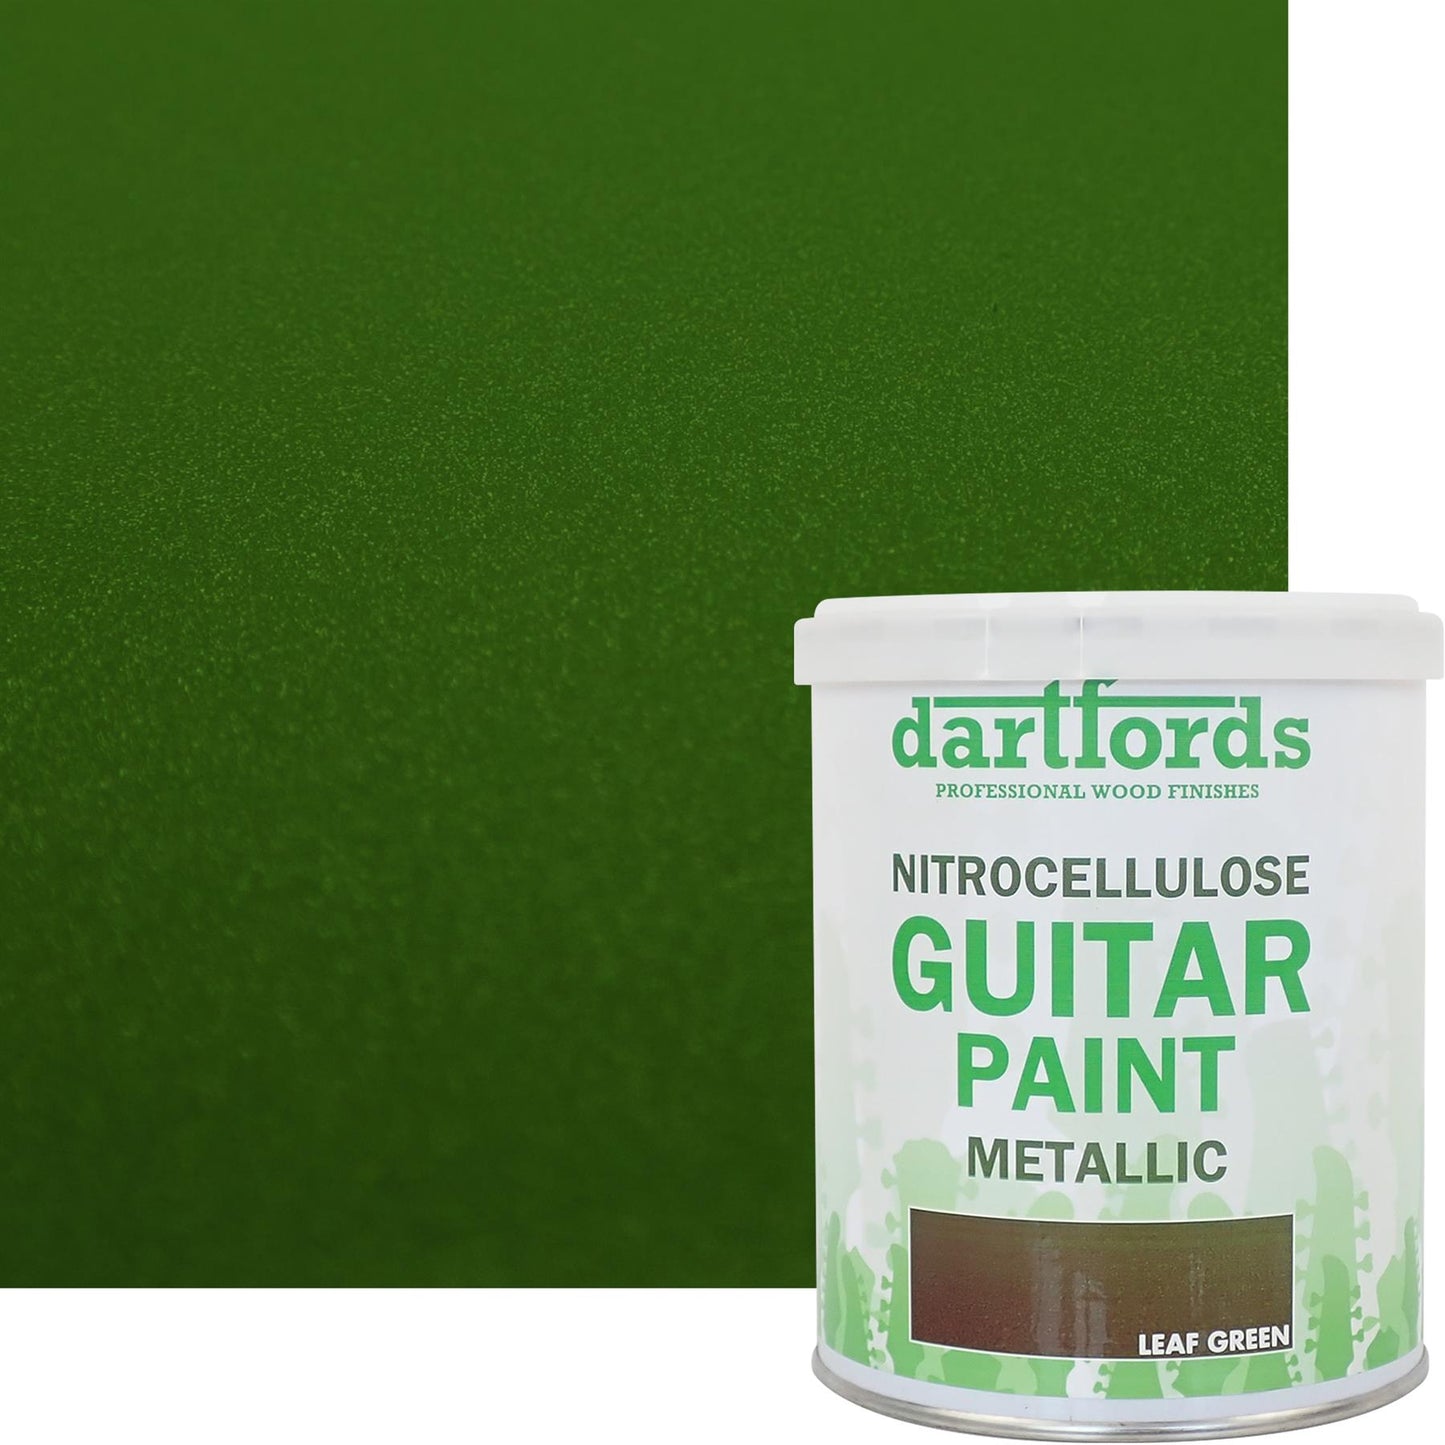 dartfords Leaf Green Metallic Nitrocellulose Guitar Paint - 1 litre Tin